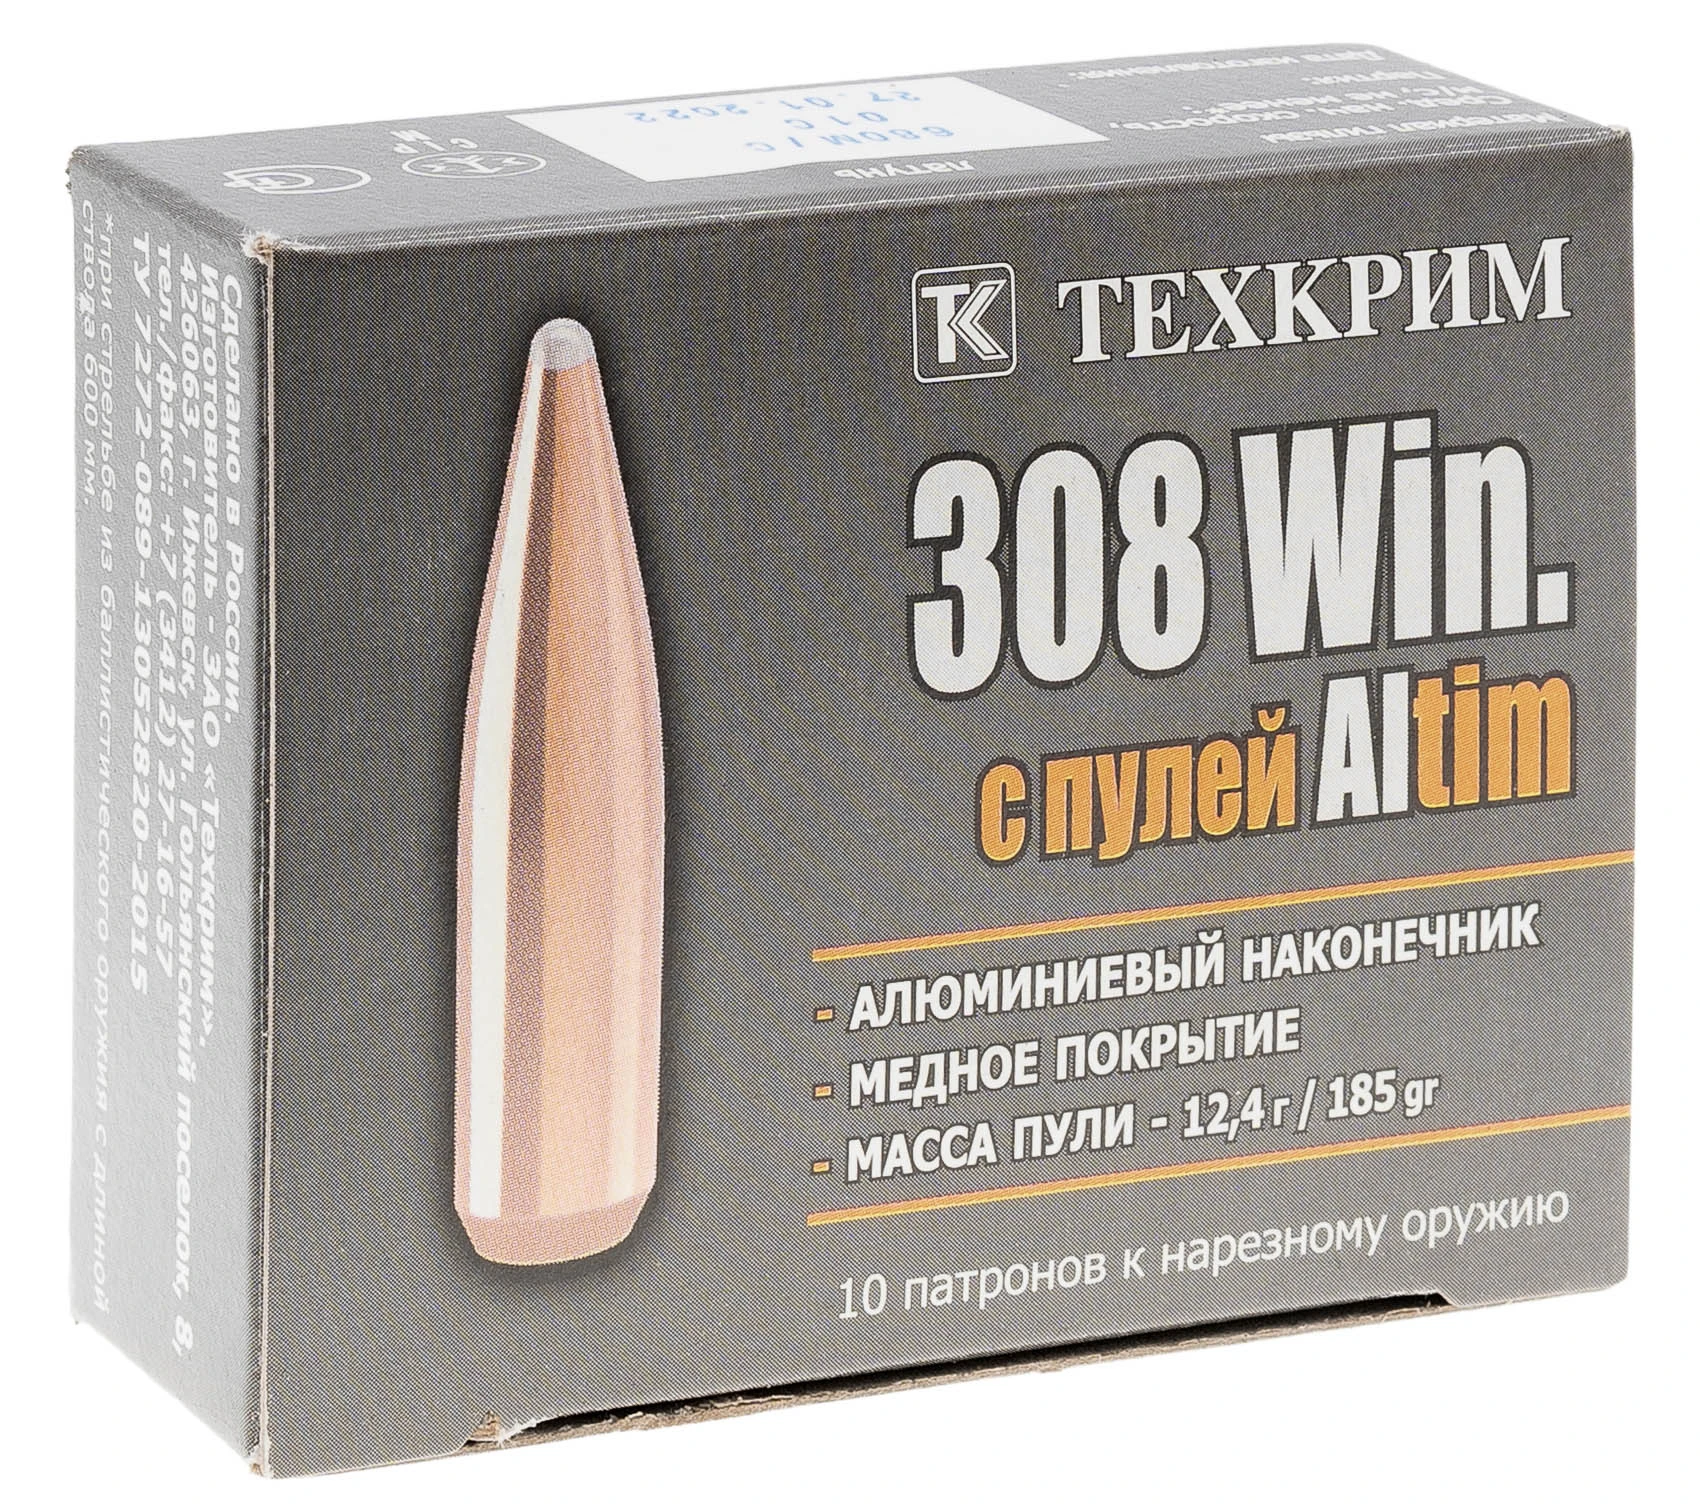 308win ALTIM (Техкрим)